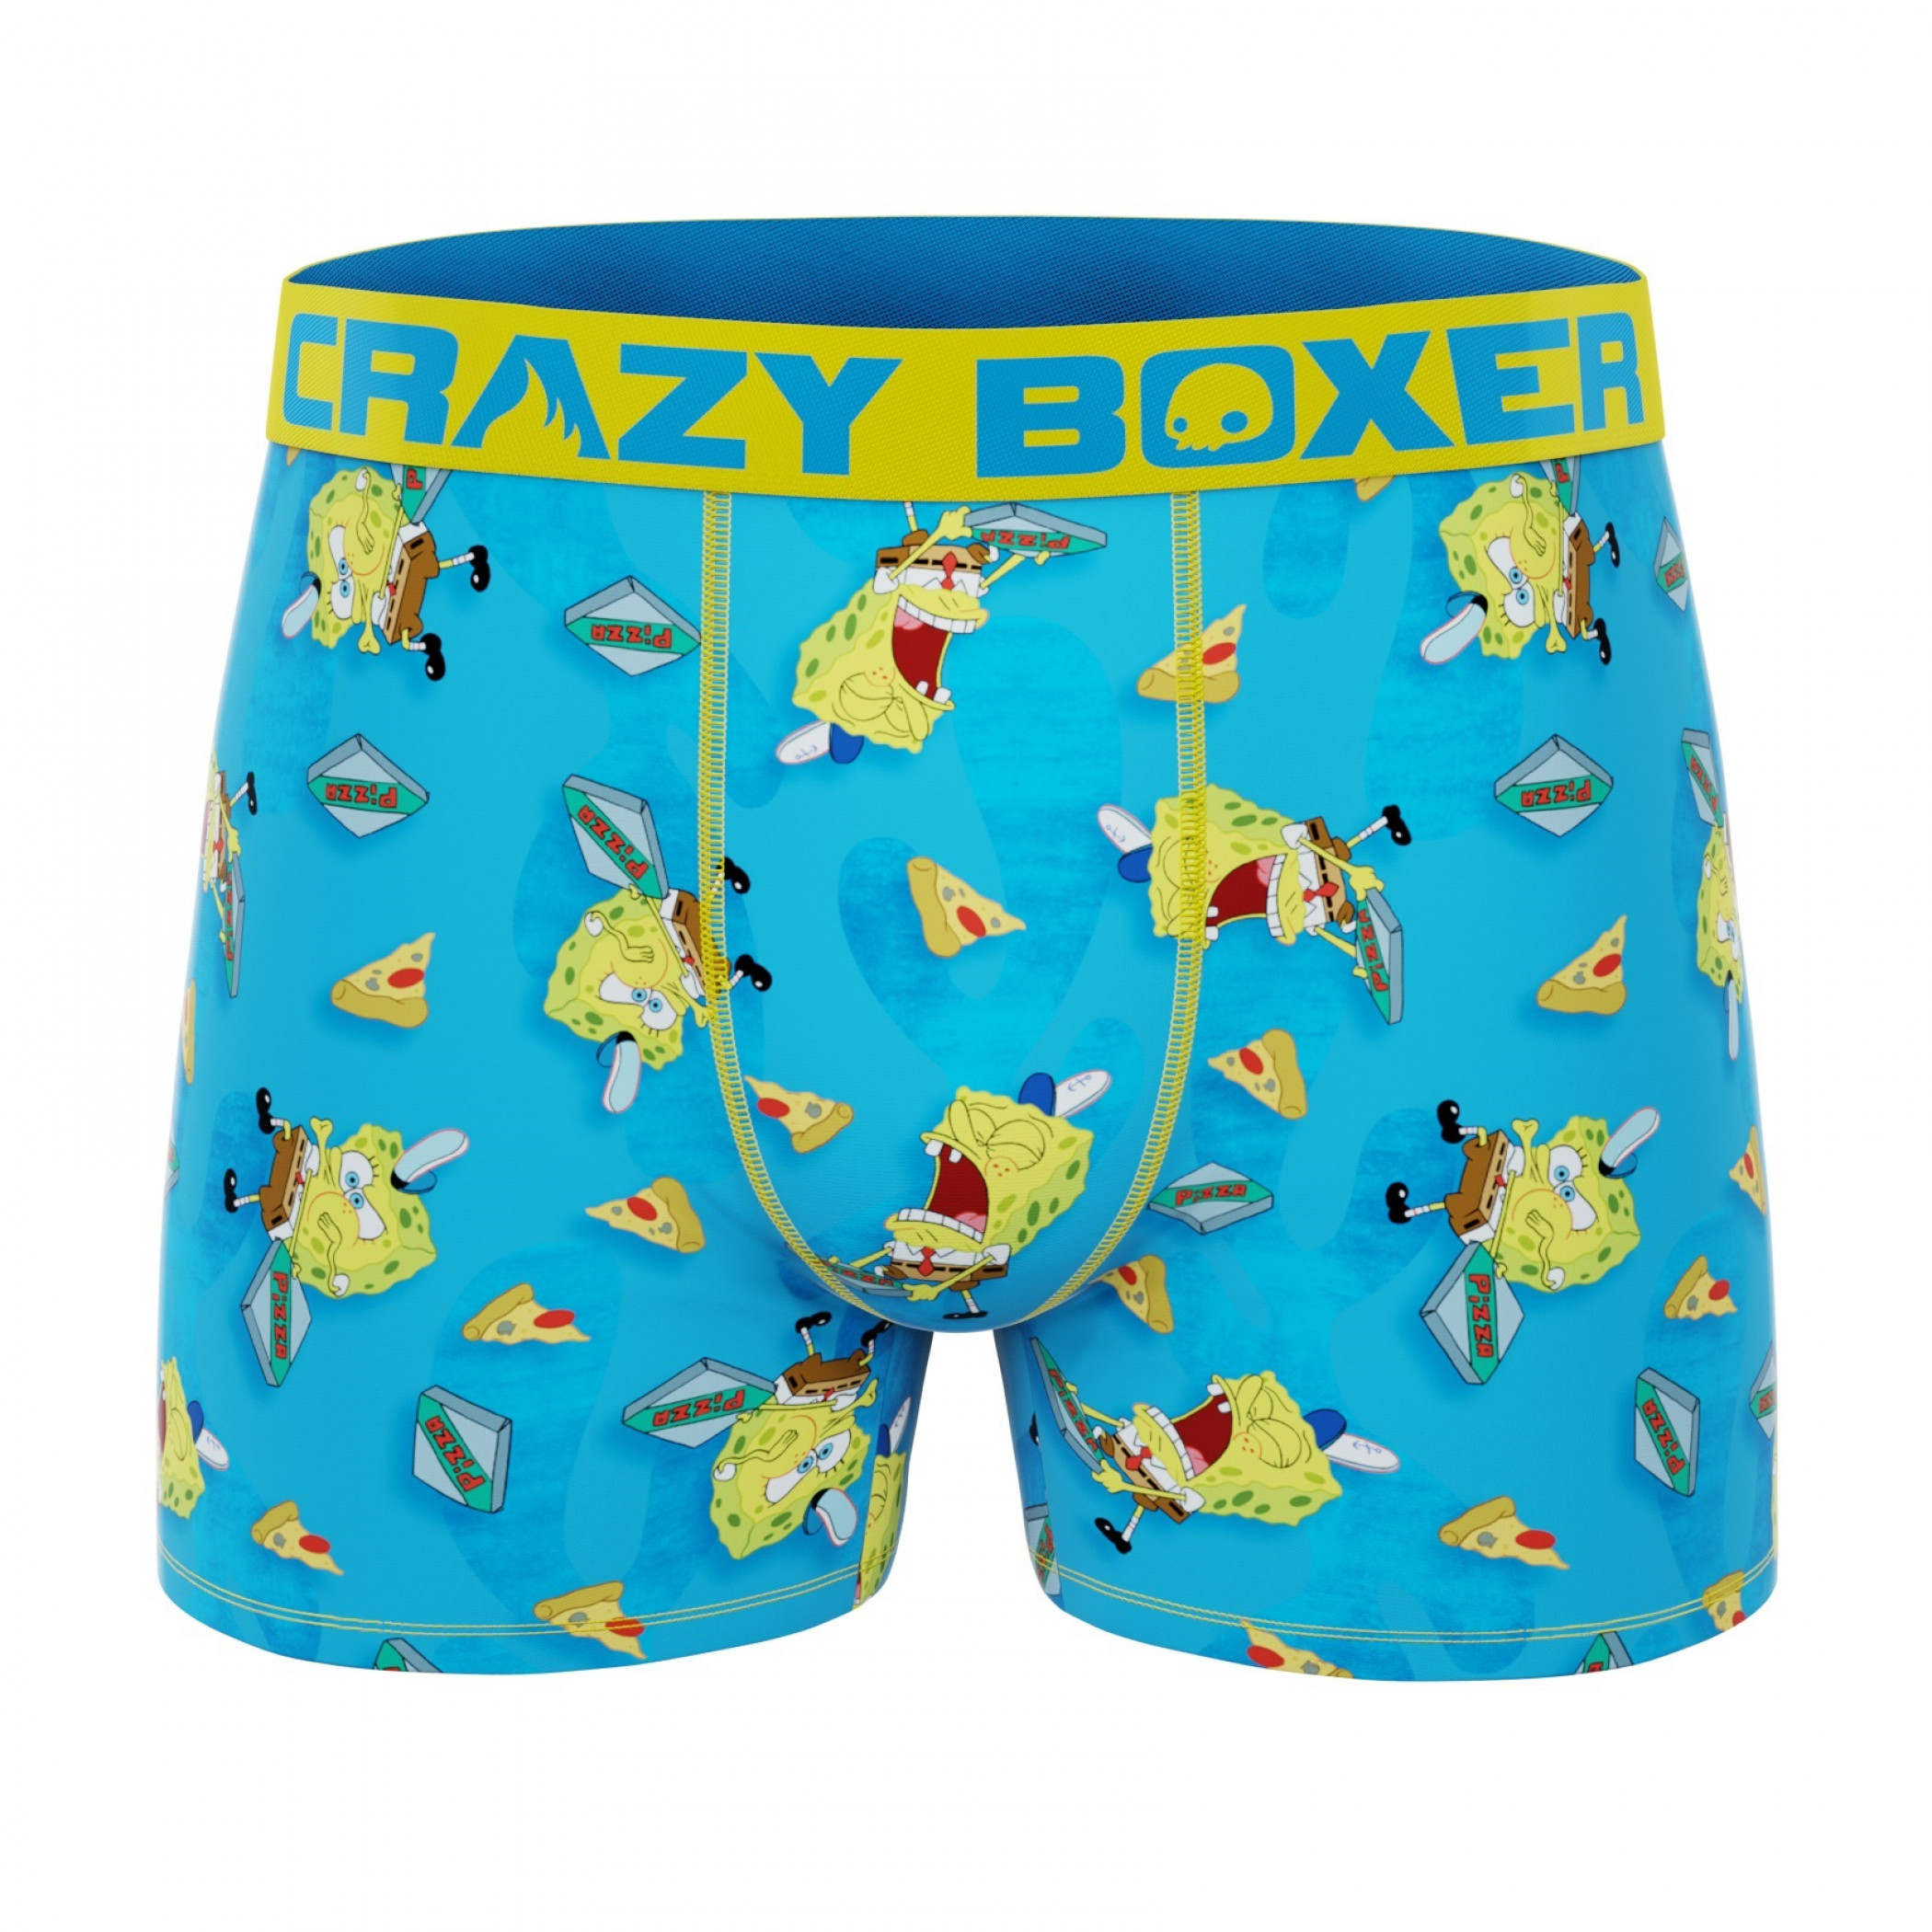 Crazy Boxer SpongeBob SquarePants Boxer Briefs in Pizza Box Yellow